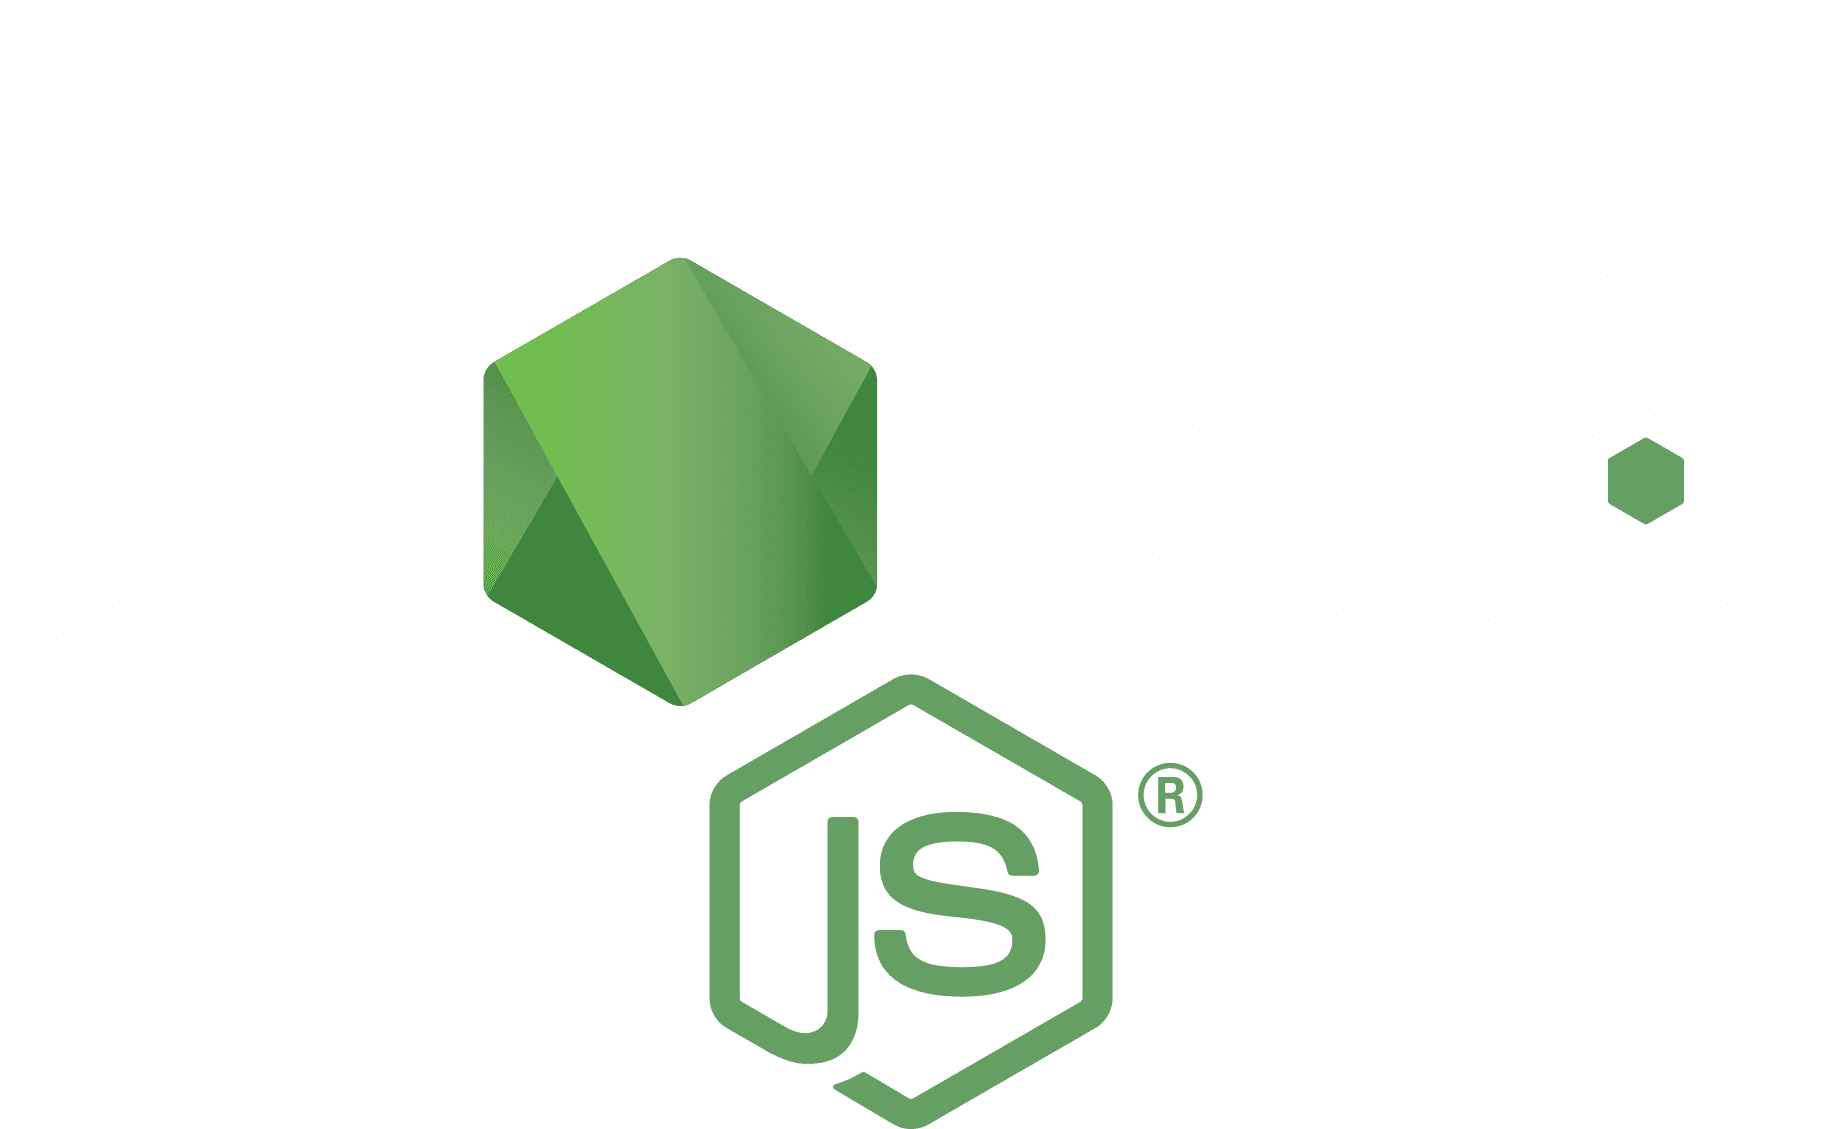 toppng.com-js-club-new-balance-png-logo-node-js-logo-white-1843×1129